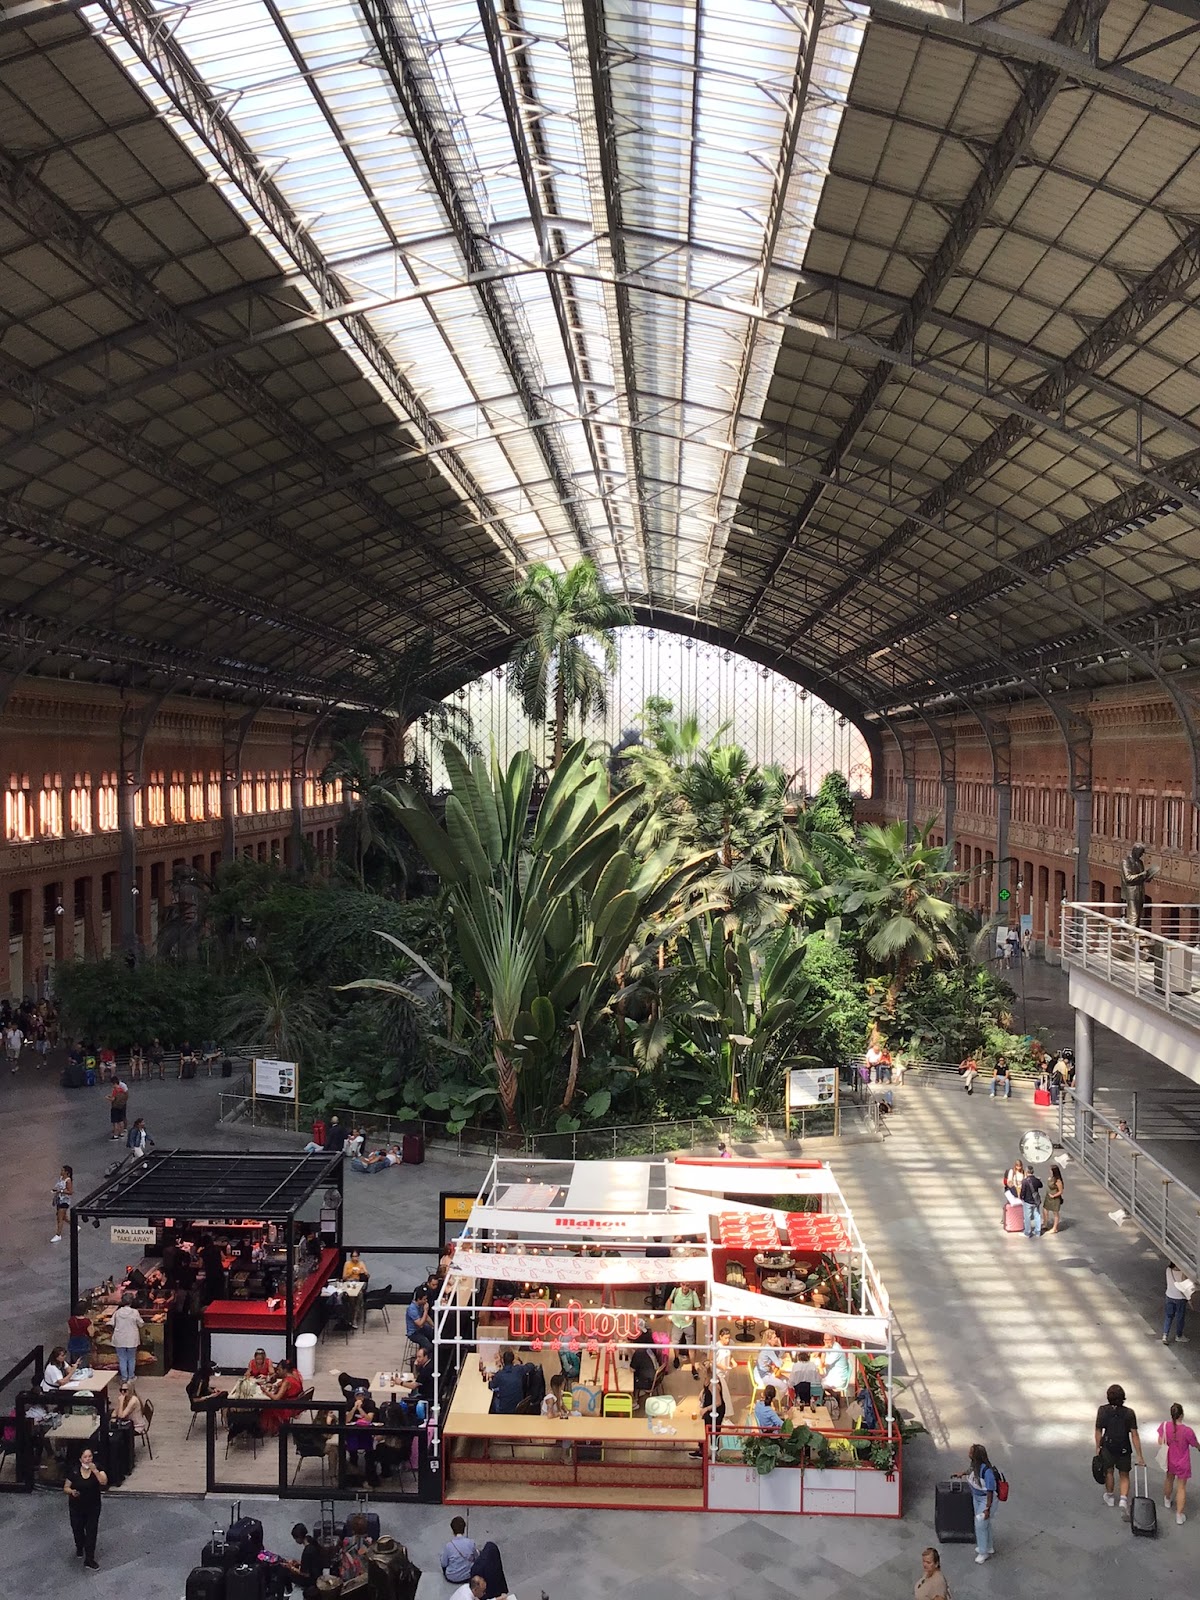 AtocheTrainStationJungle - Madrid's main train station has in indoor tropical jungle.